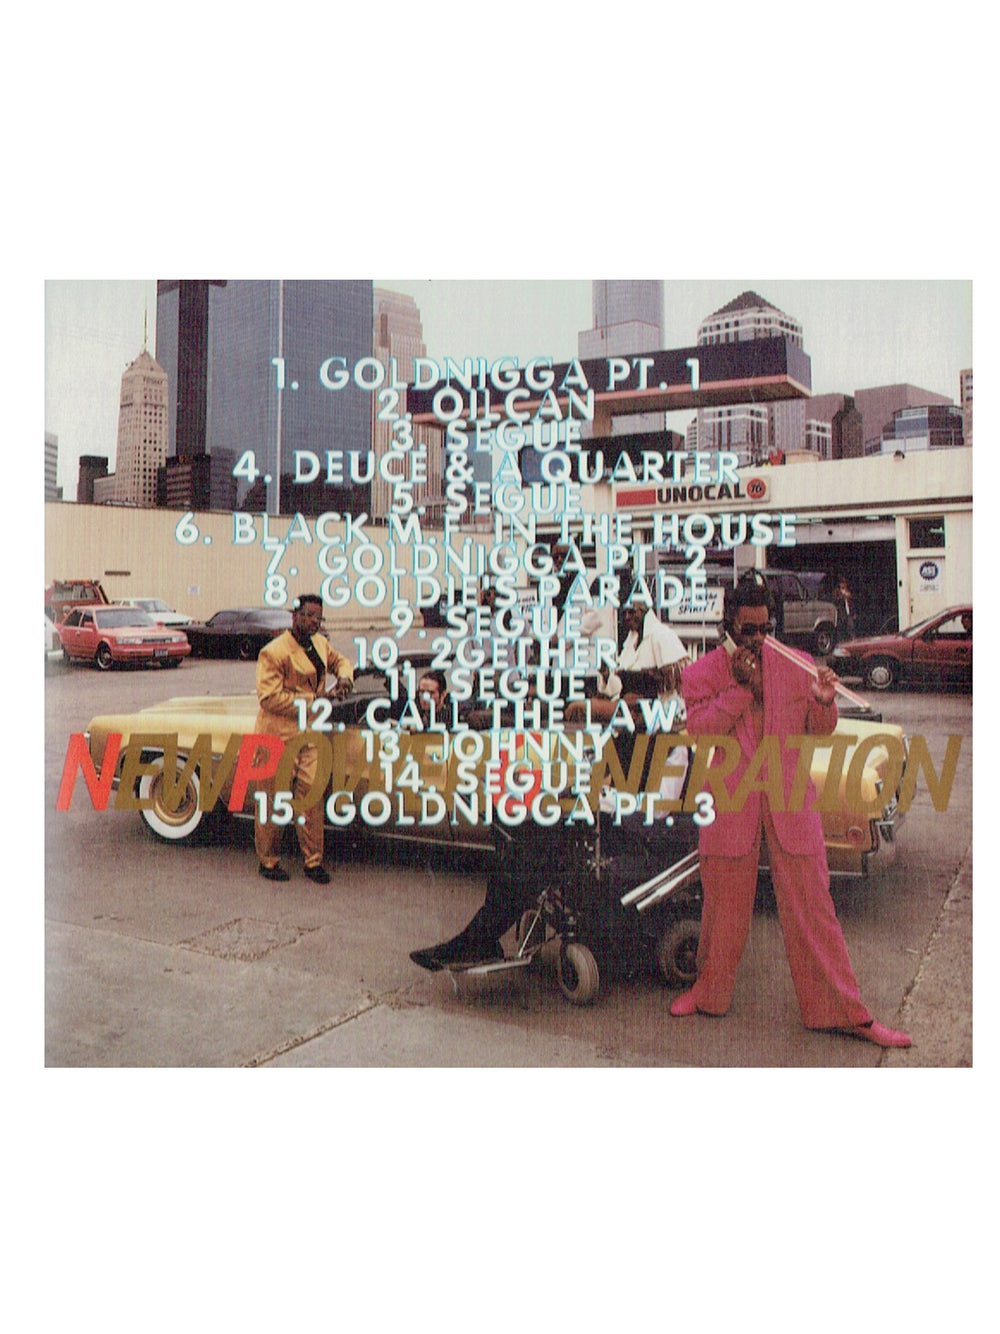 Prince – The New Power Generation GOLD  N CD Album 15 Tracks 8 Panel Sleeve Prince